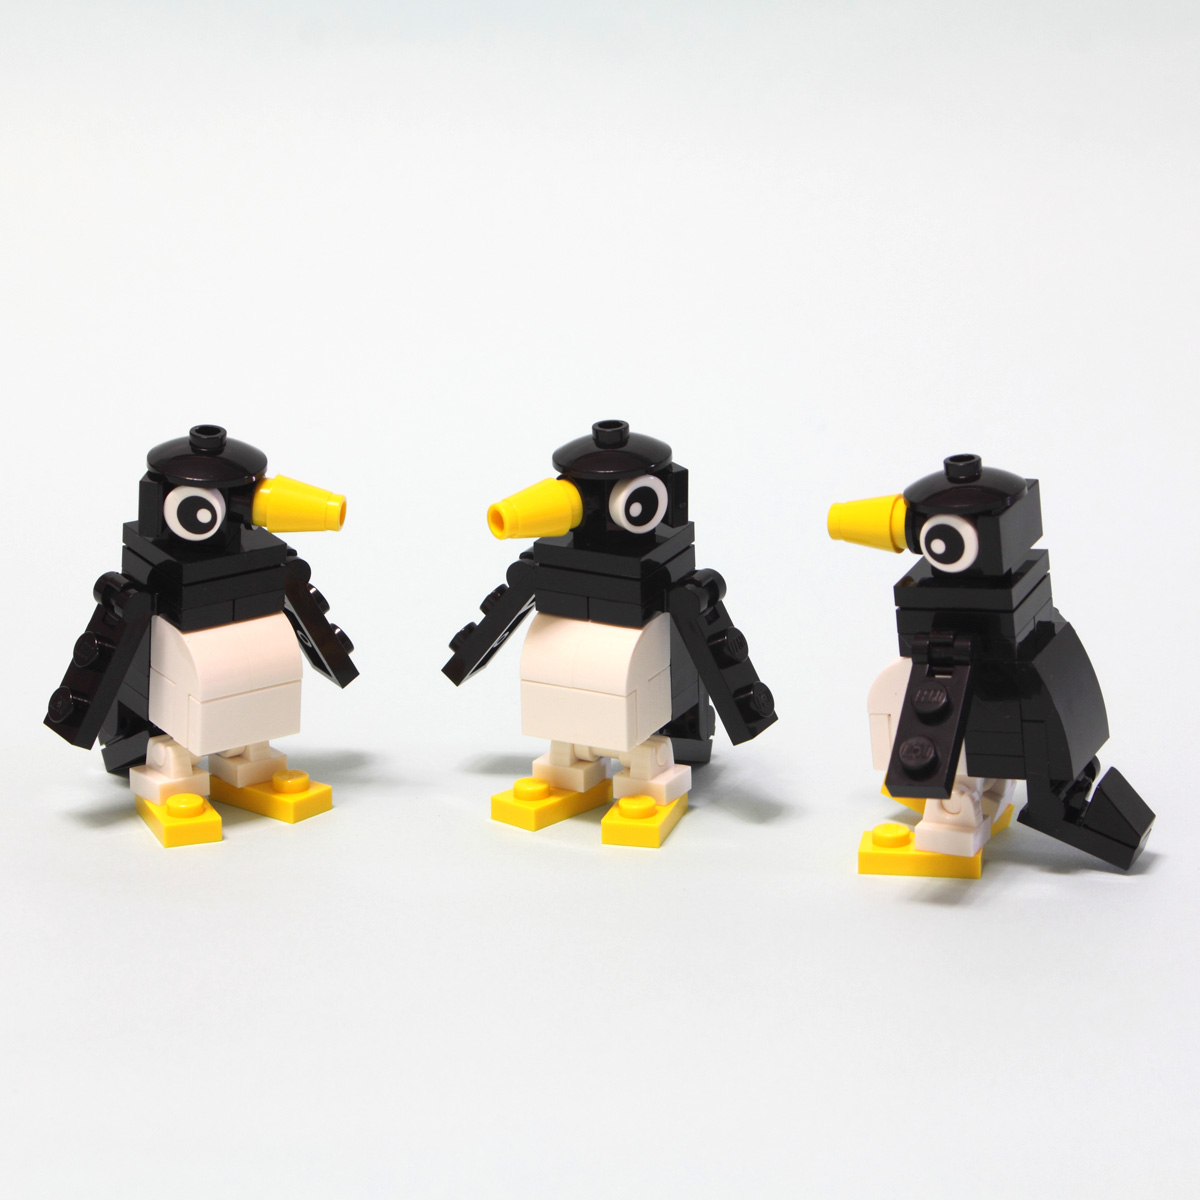 LEGO penguin